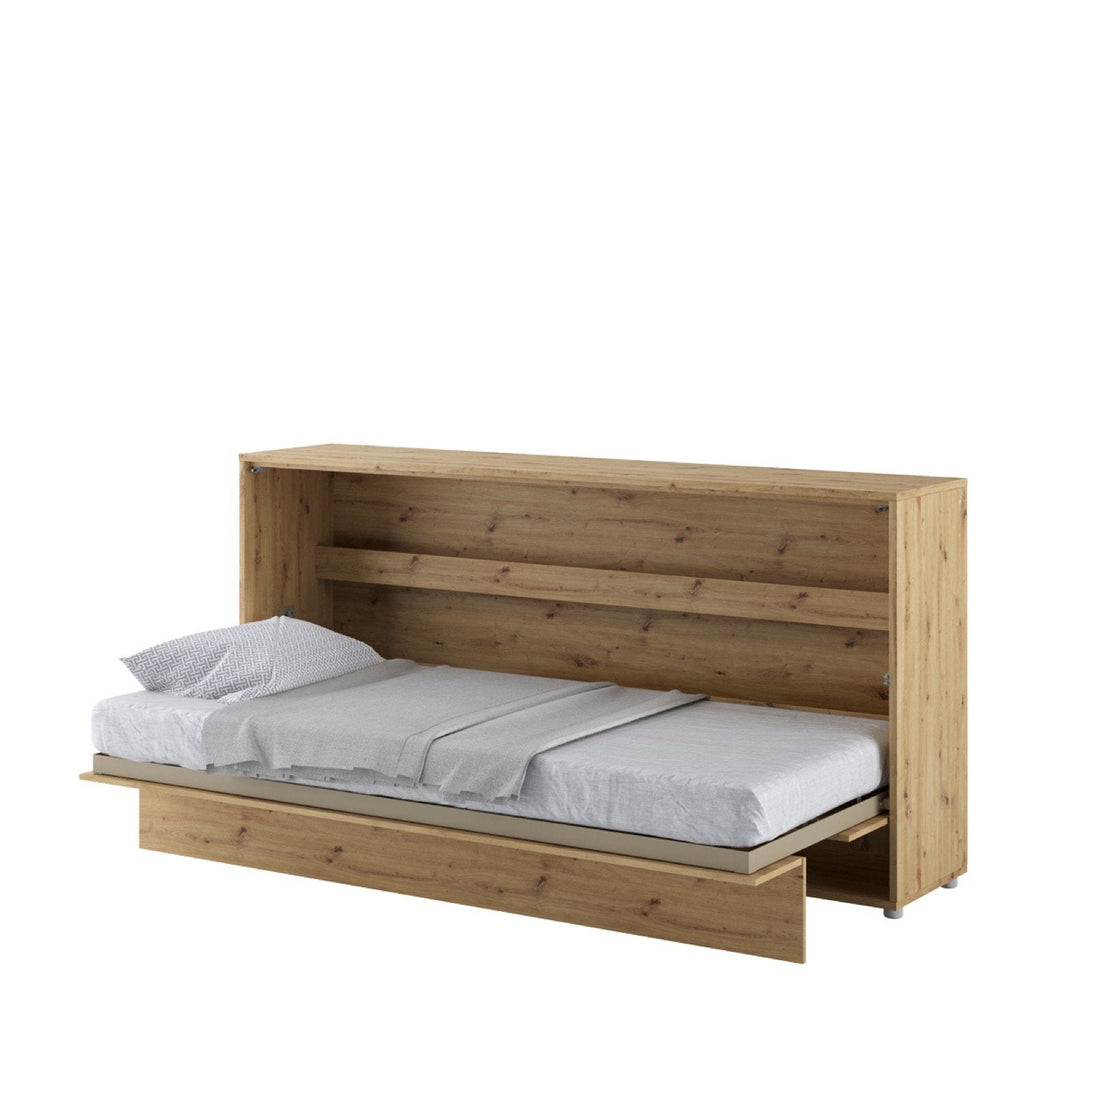 BC-06 Horizontal Wall Bed Concept 90cm - £865.8 - Wall Bed 